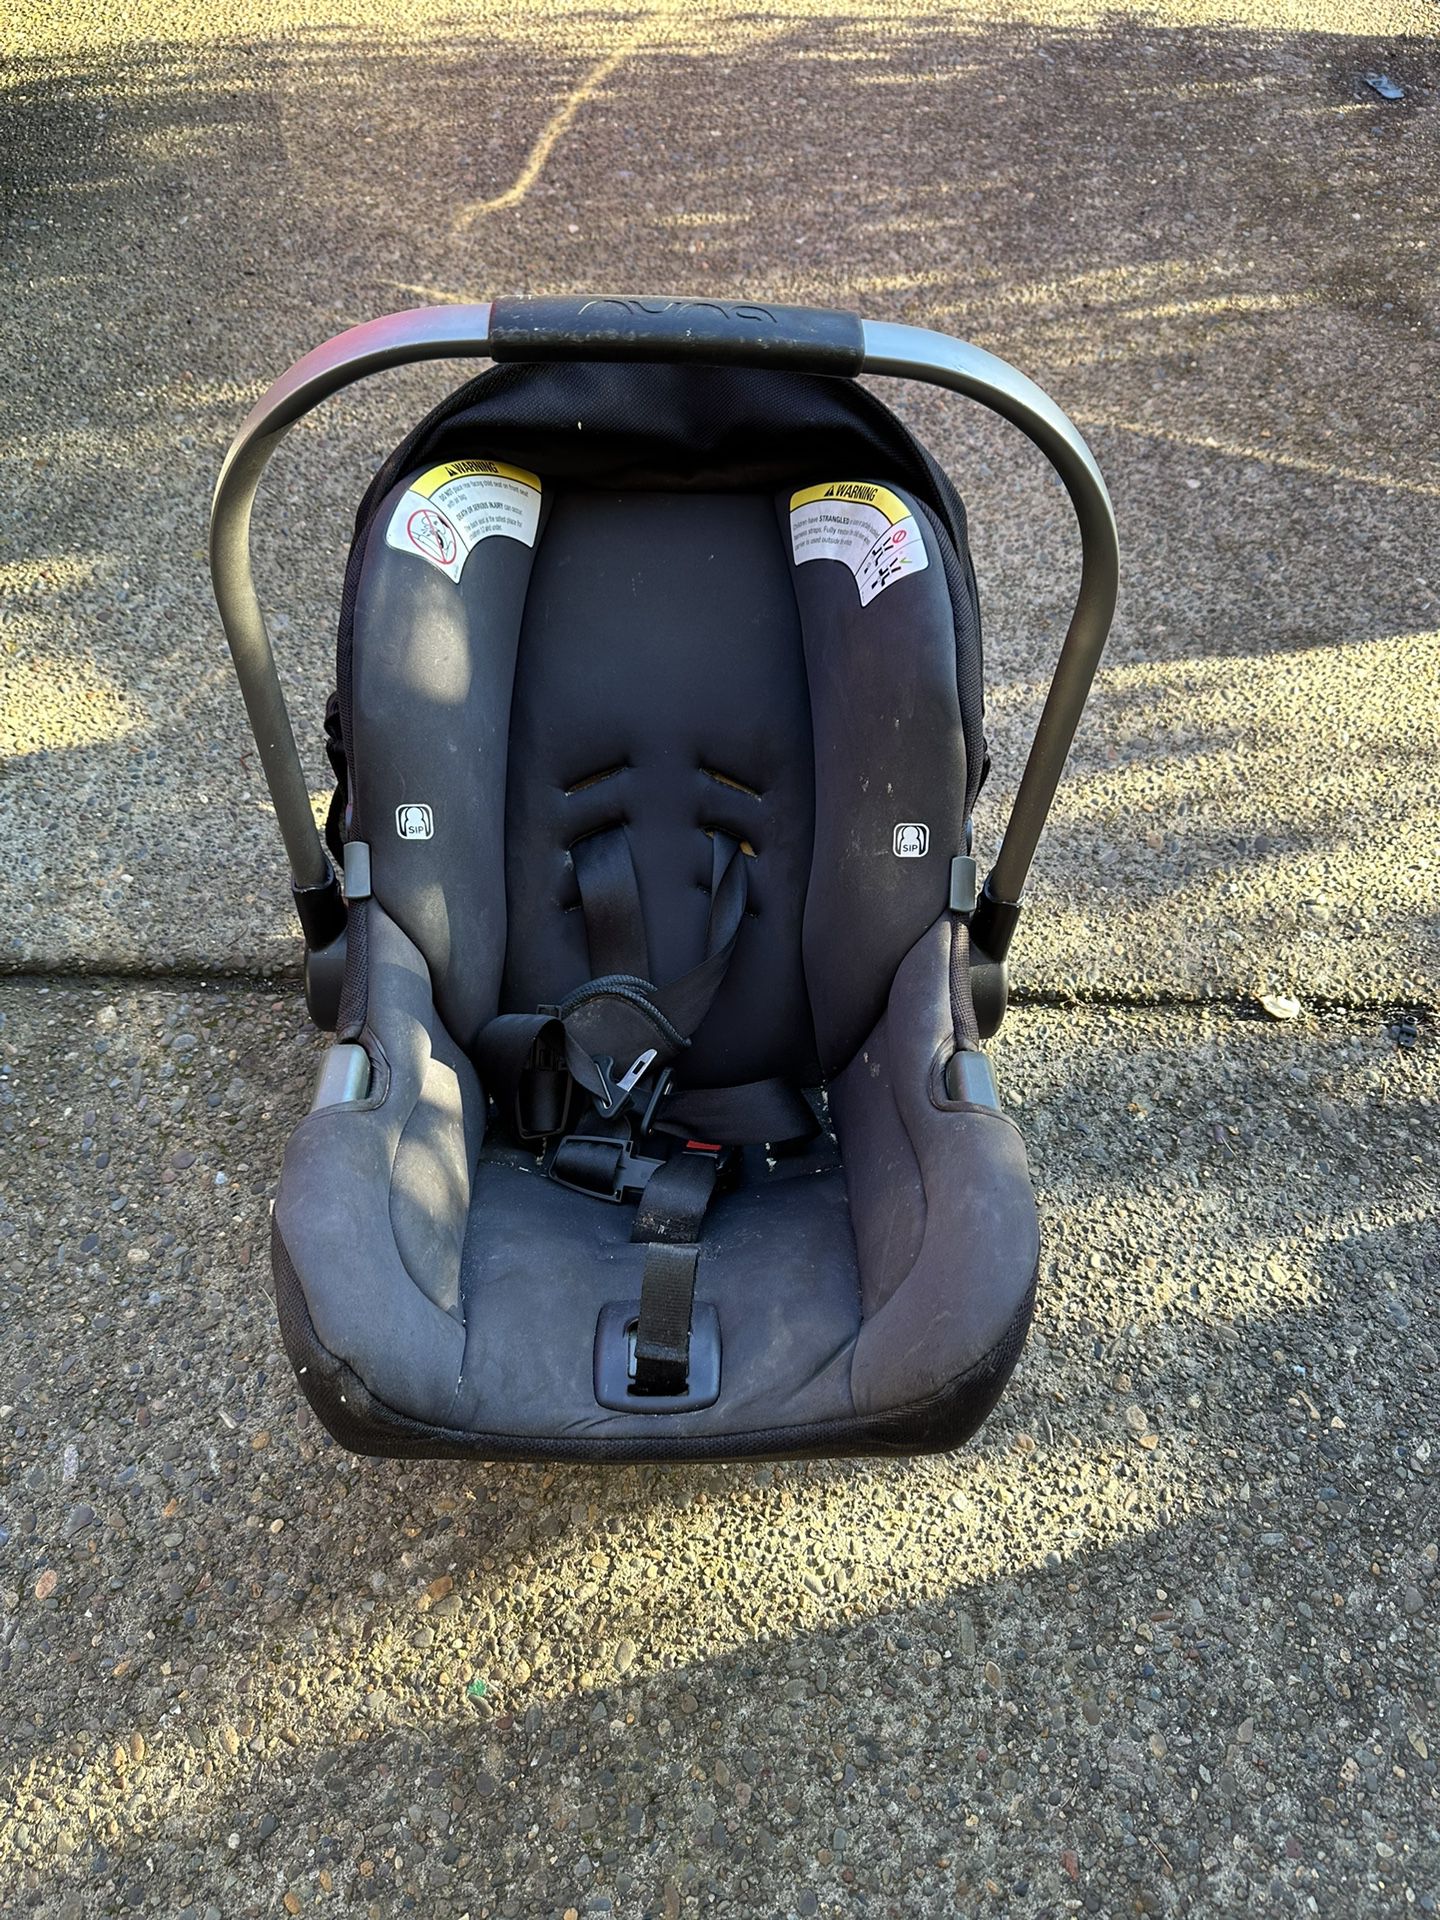 Nuna Pipa Infant car seat